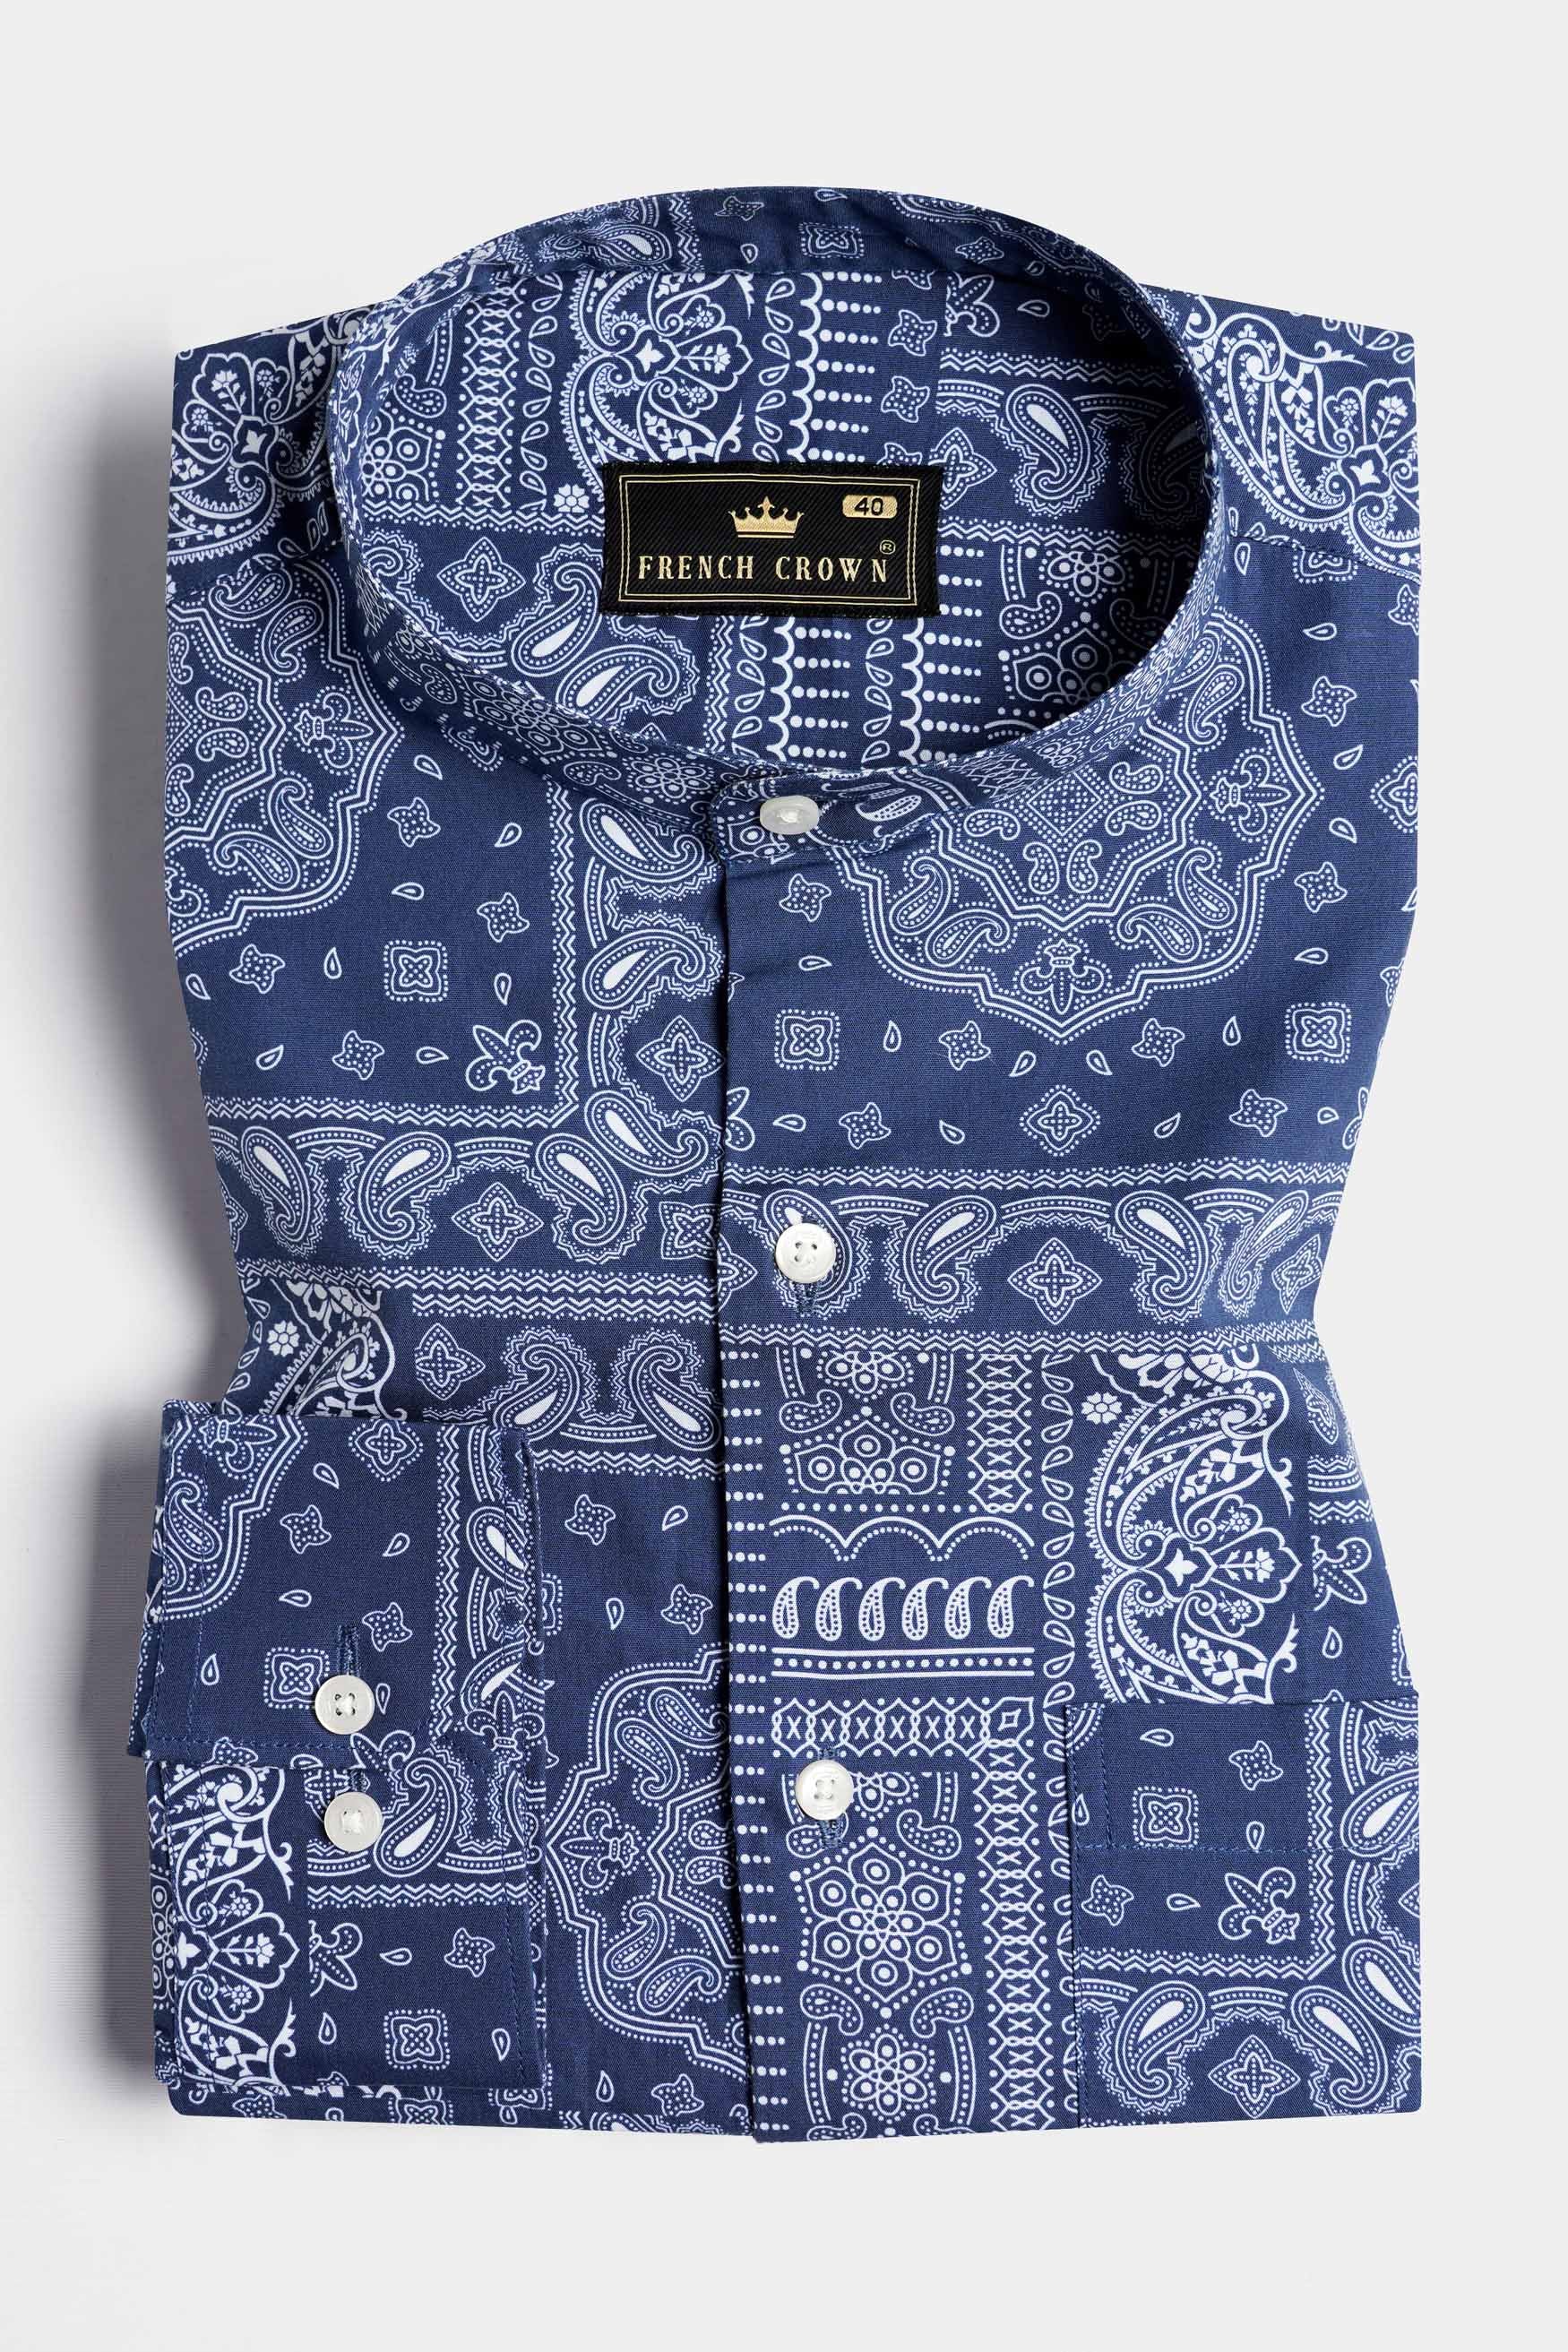 Rhino Blue and White Paisley Printed Royal Oxford Shirt